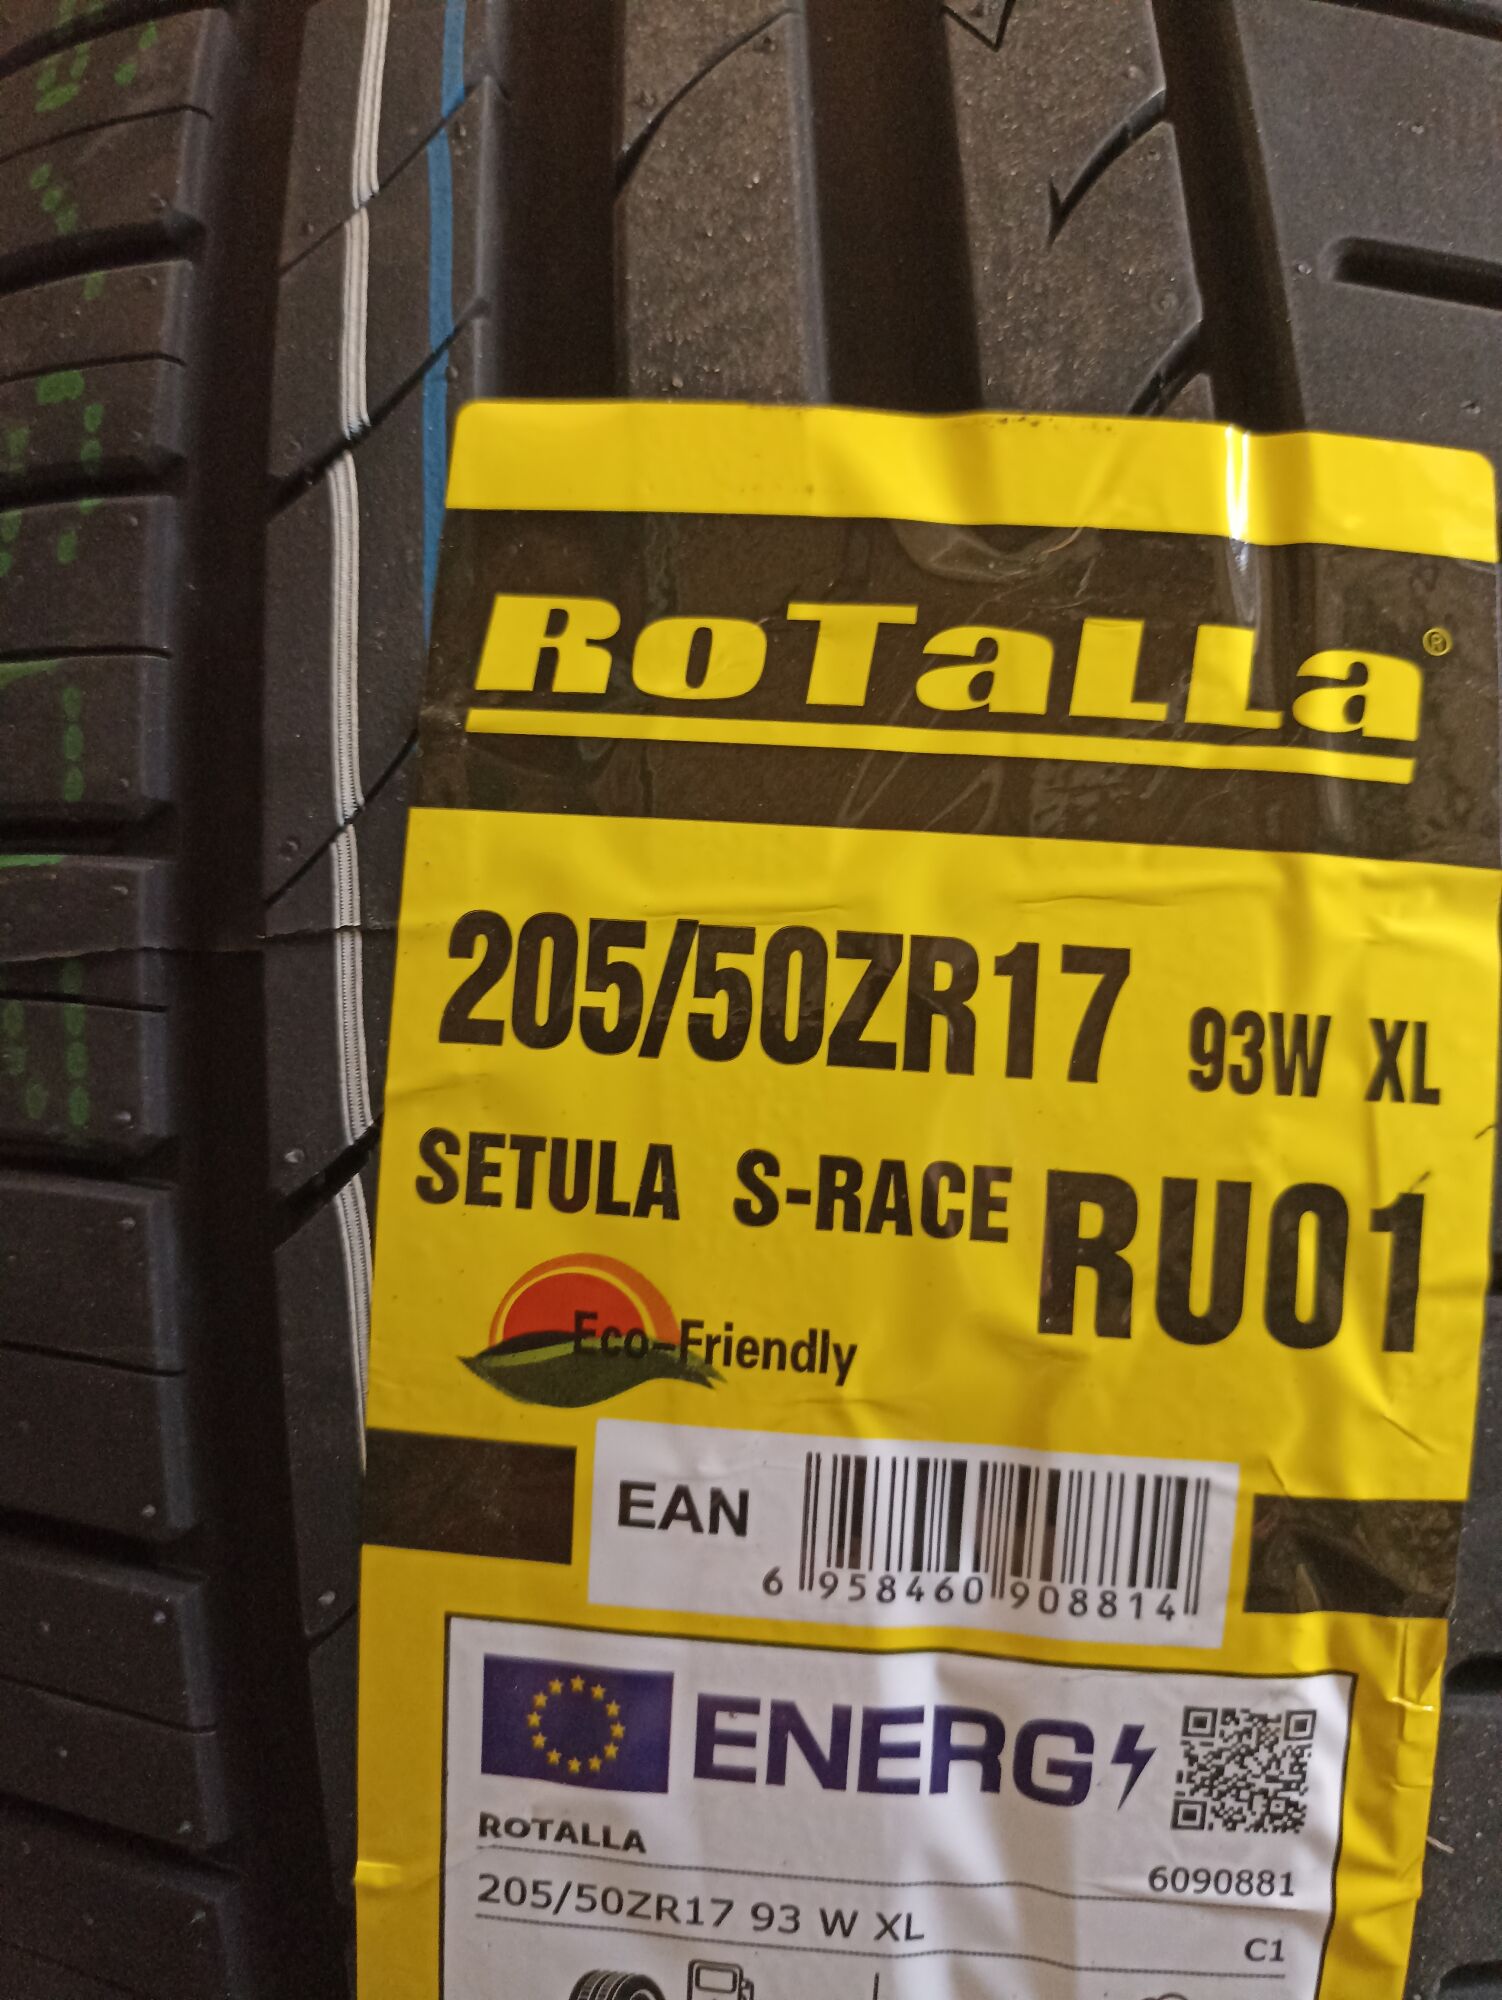 Rotalla setula w race s500. Rotalla Setula s-Race ru01. Rotalla шины производитель. Шины Rotalla лого. Rotalla ru01 195/45 r16 84v XL.